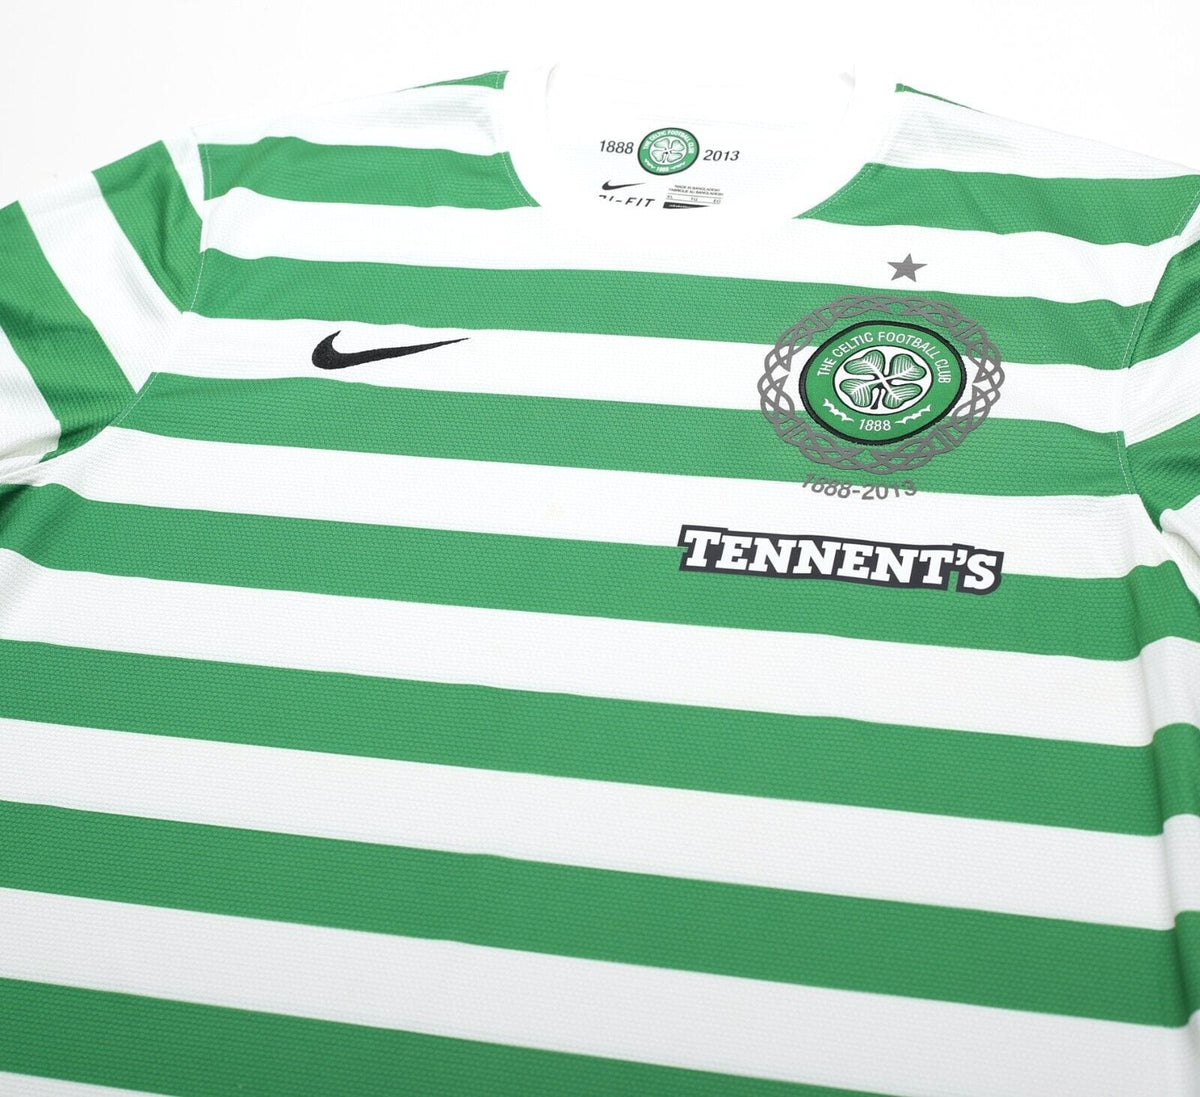 Football Shirts Celtic 